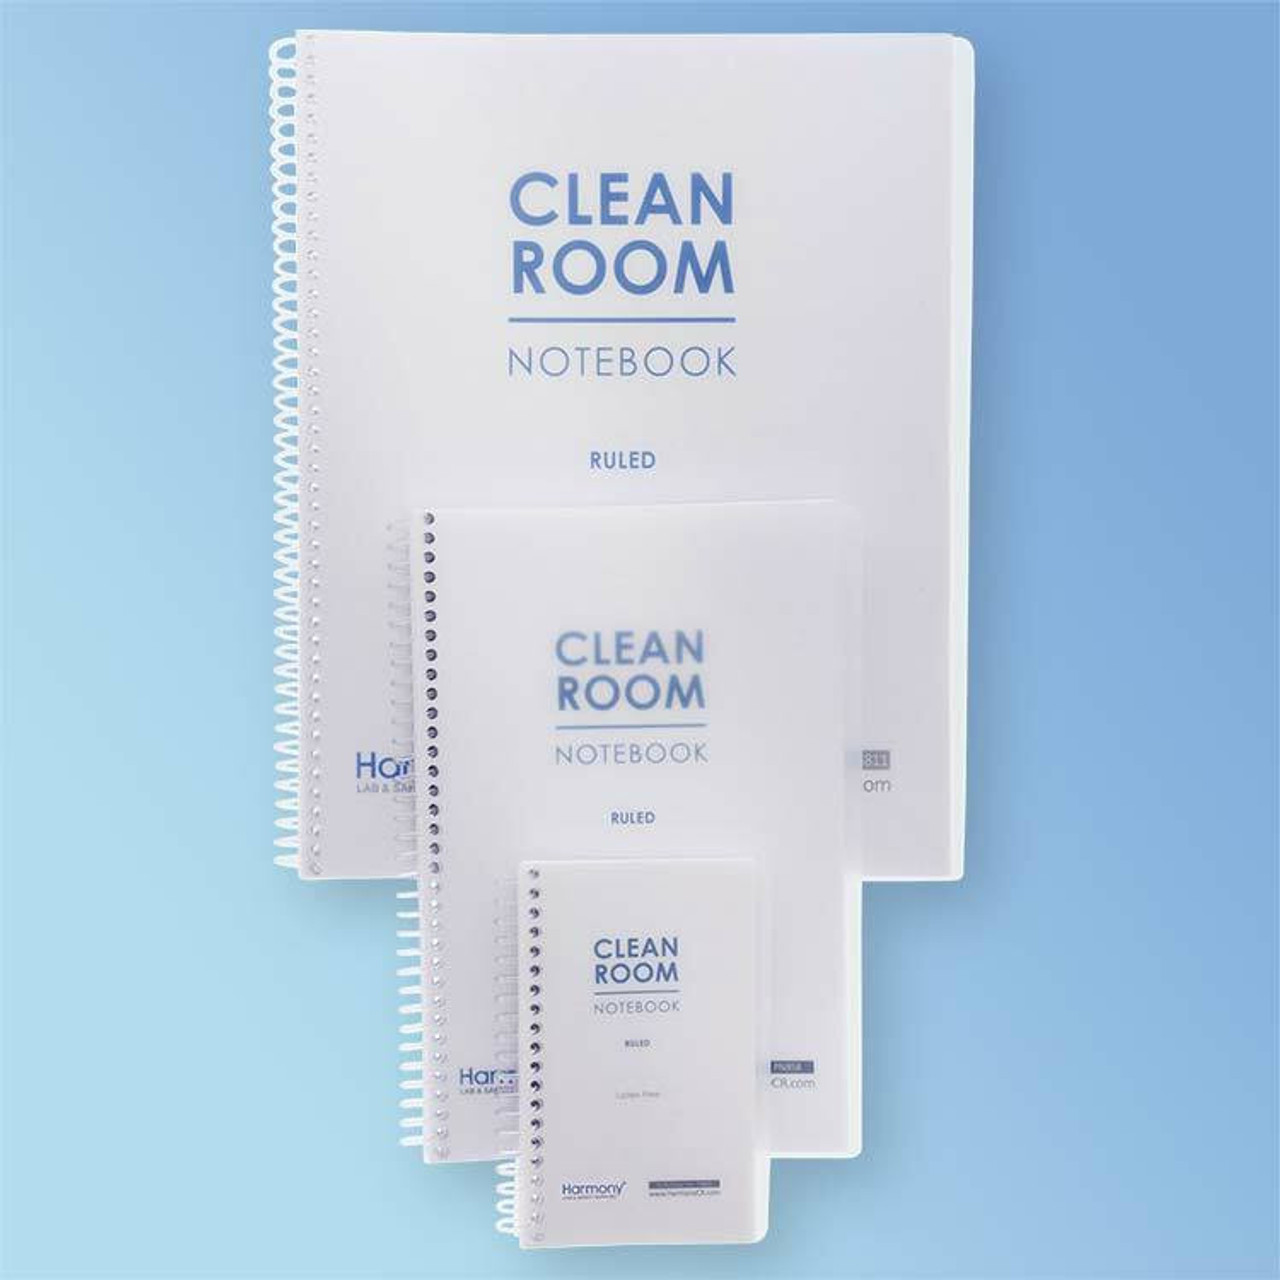 DocU-Sleeves, 8.5 x 14 Clear Plastic Document Protector